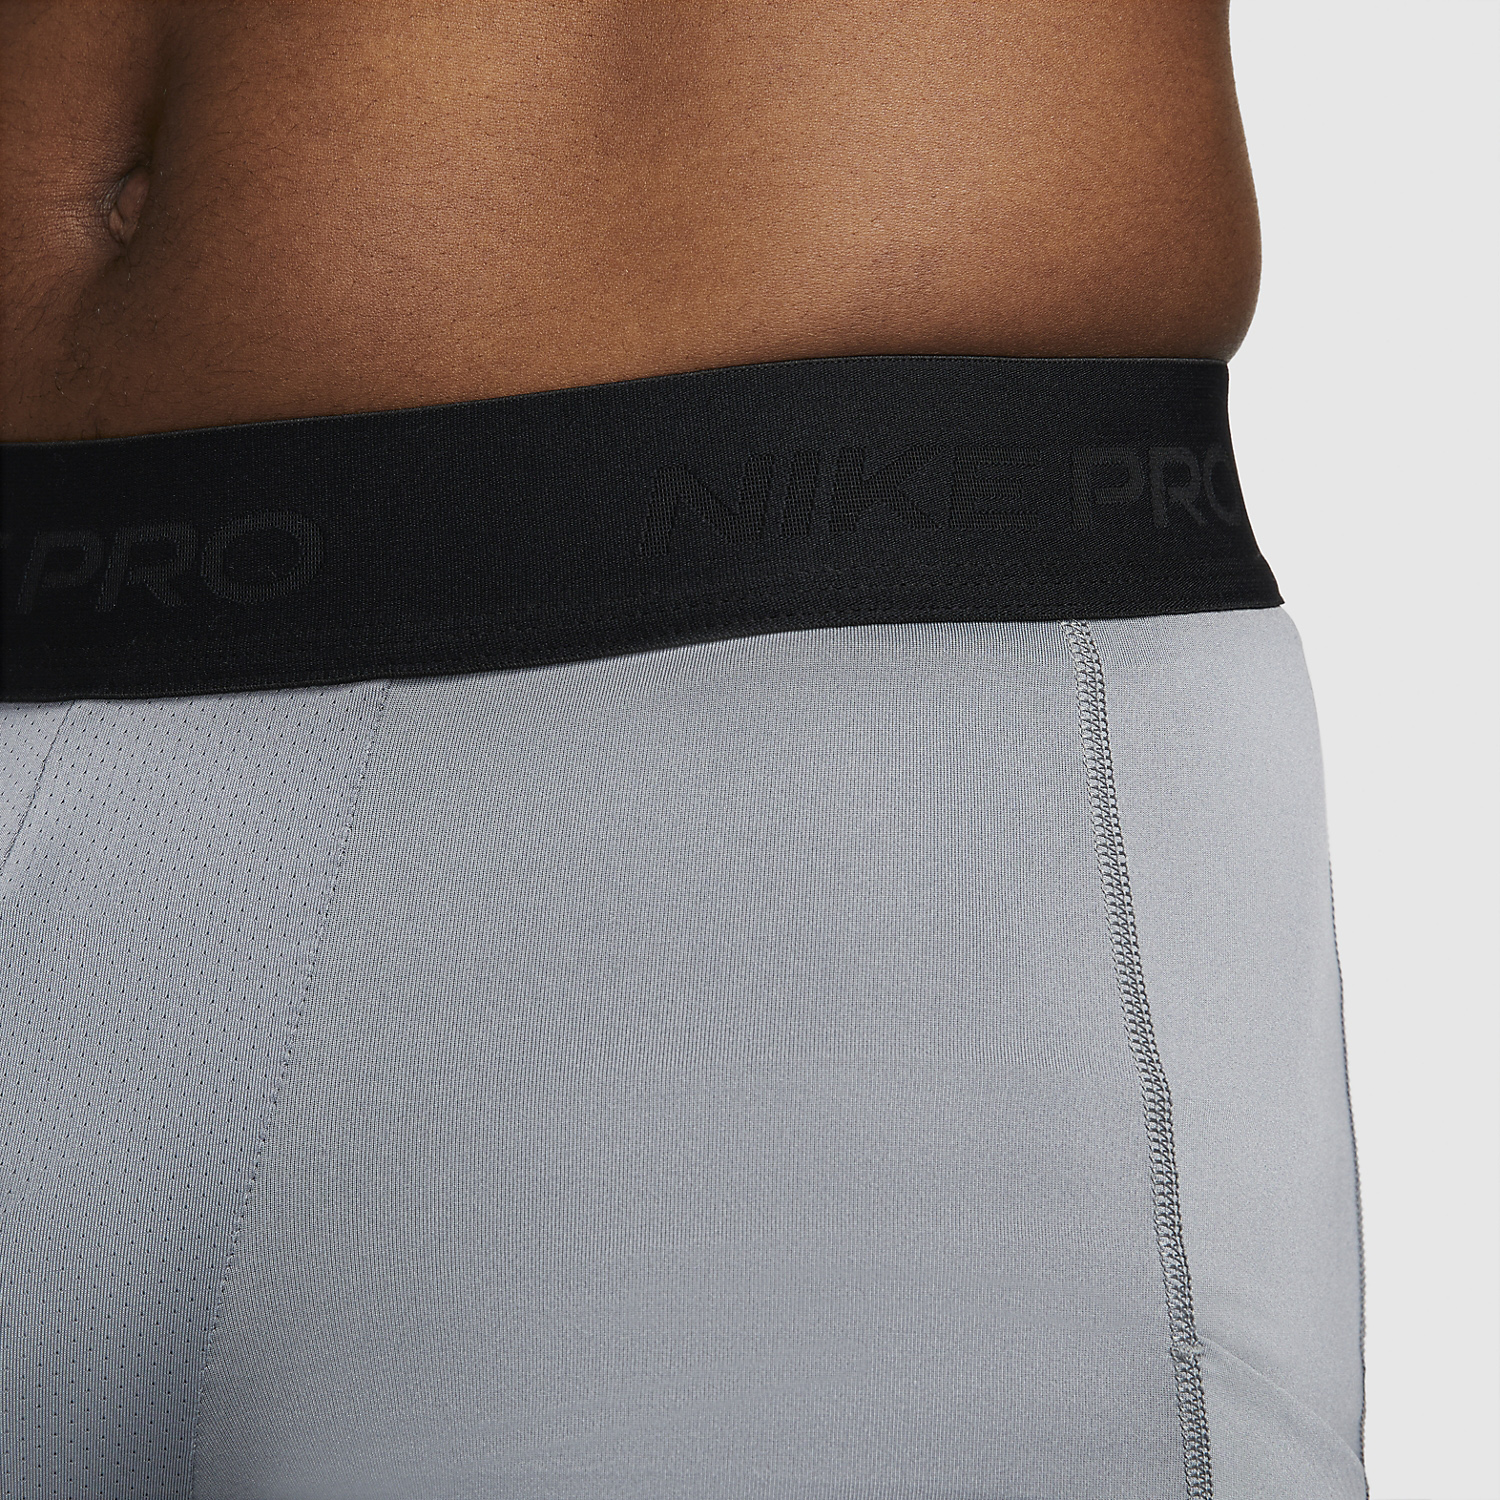 Nike Pro Short Tights - Smoke Grey/Black